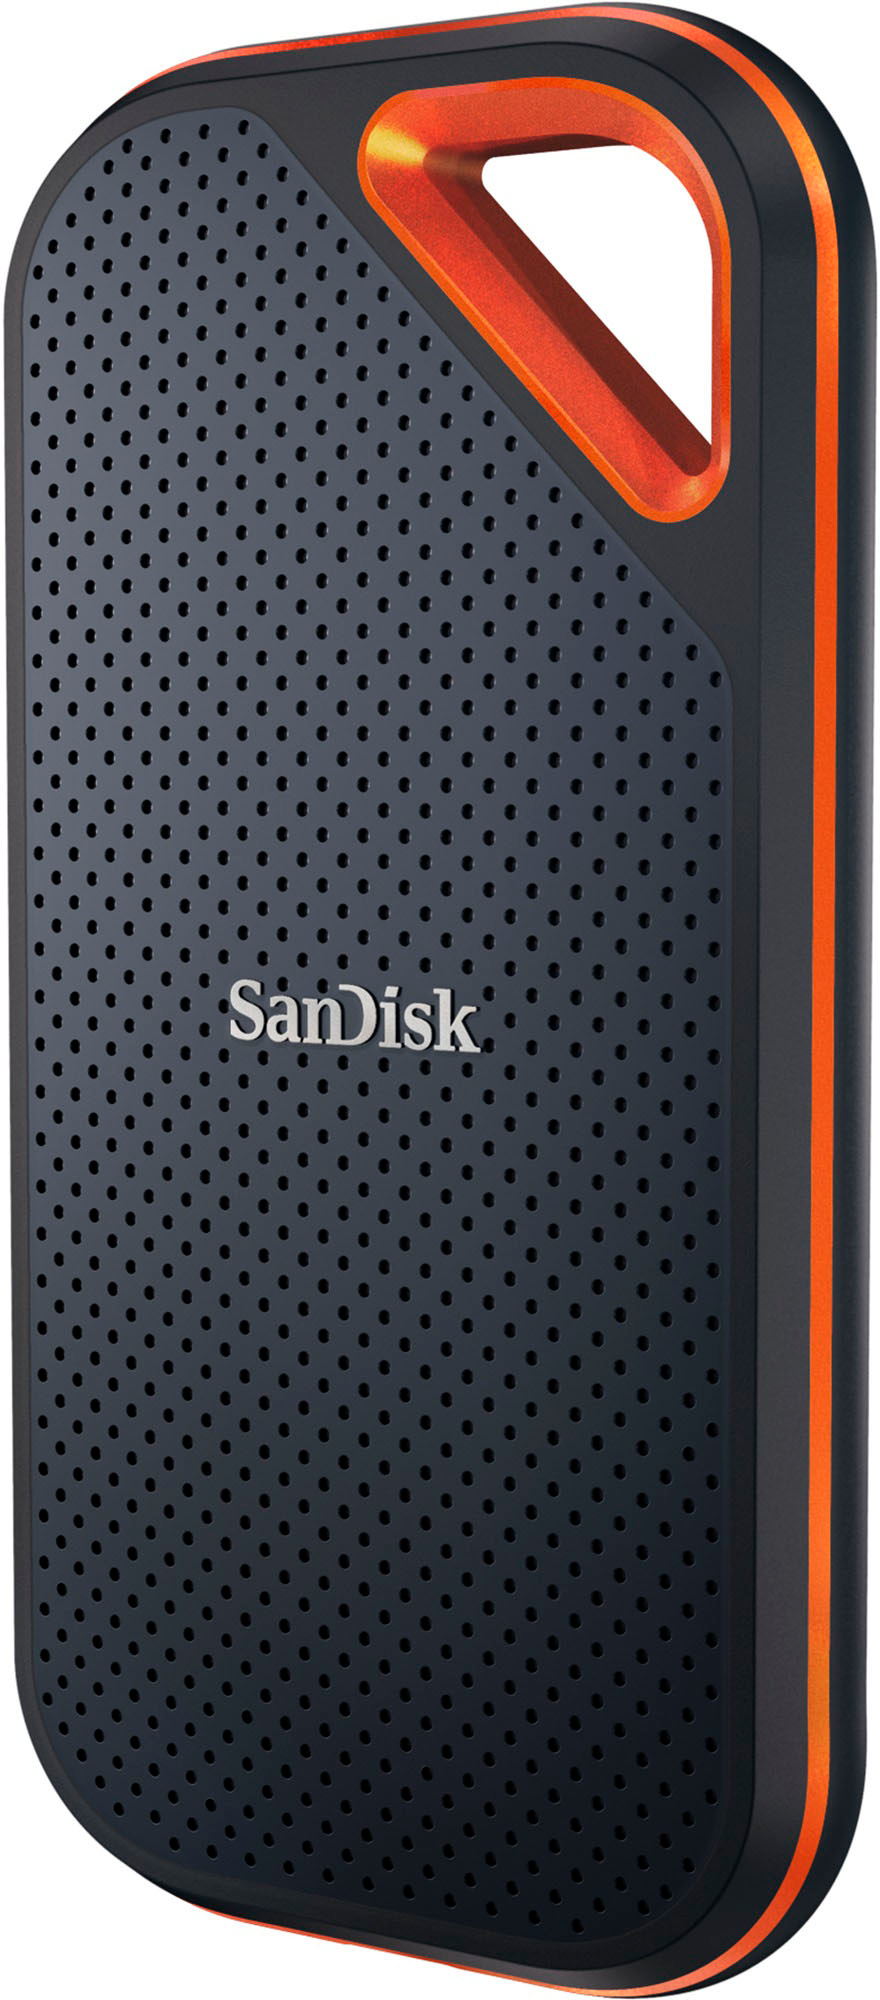 SanDisk Extreme Pro Portable 4TB External USB-C NVMe SSD Black